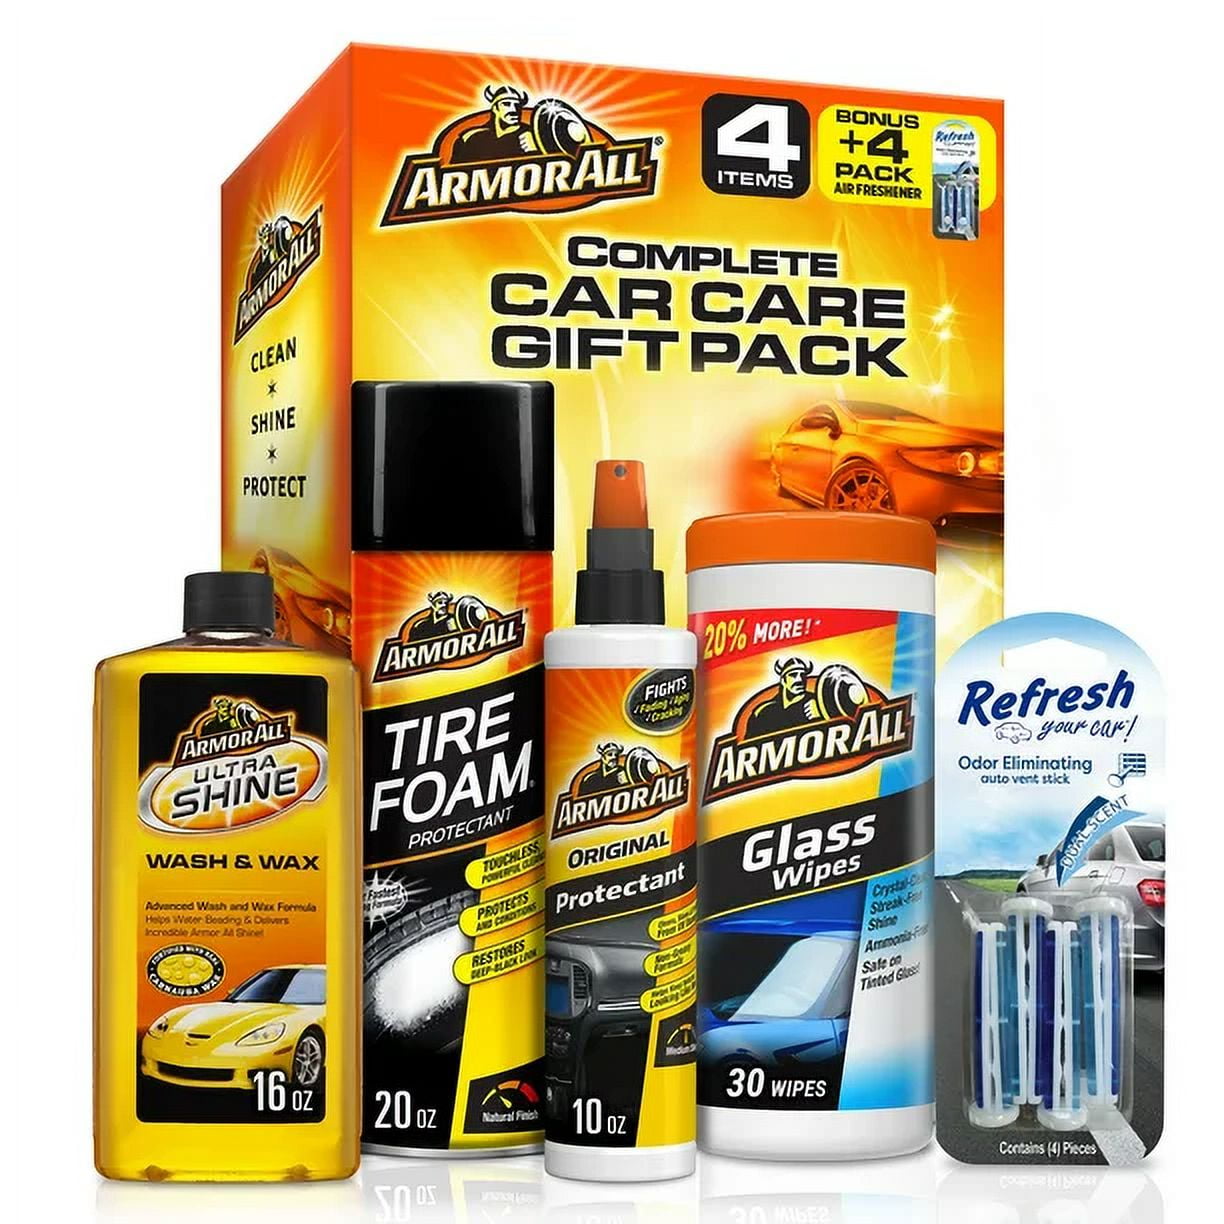 Car Care Kit - Complete Car Detailing Kit